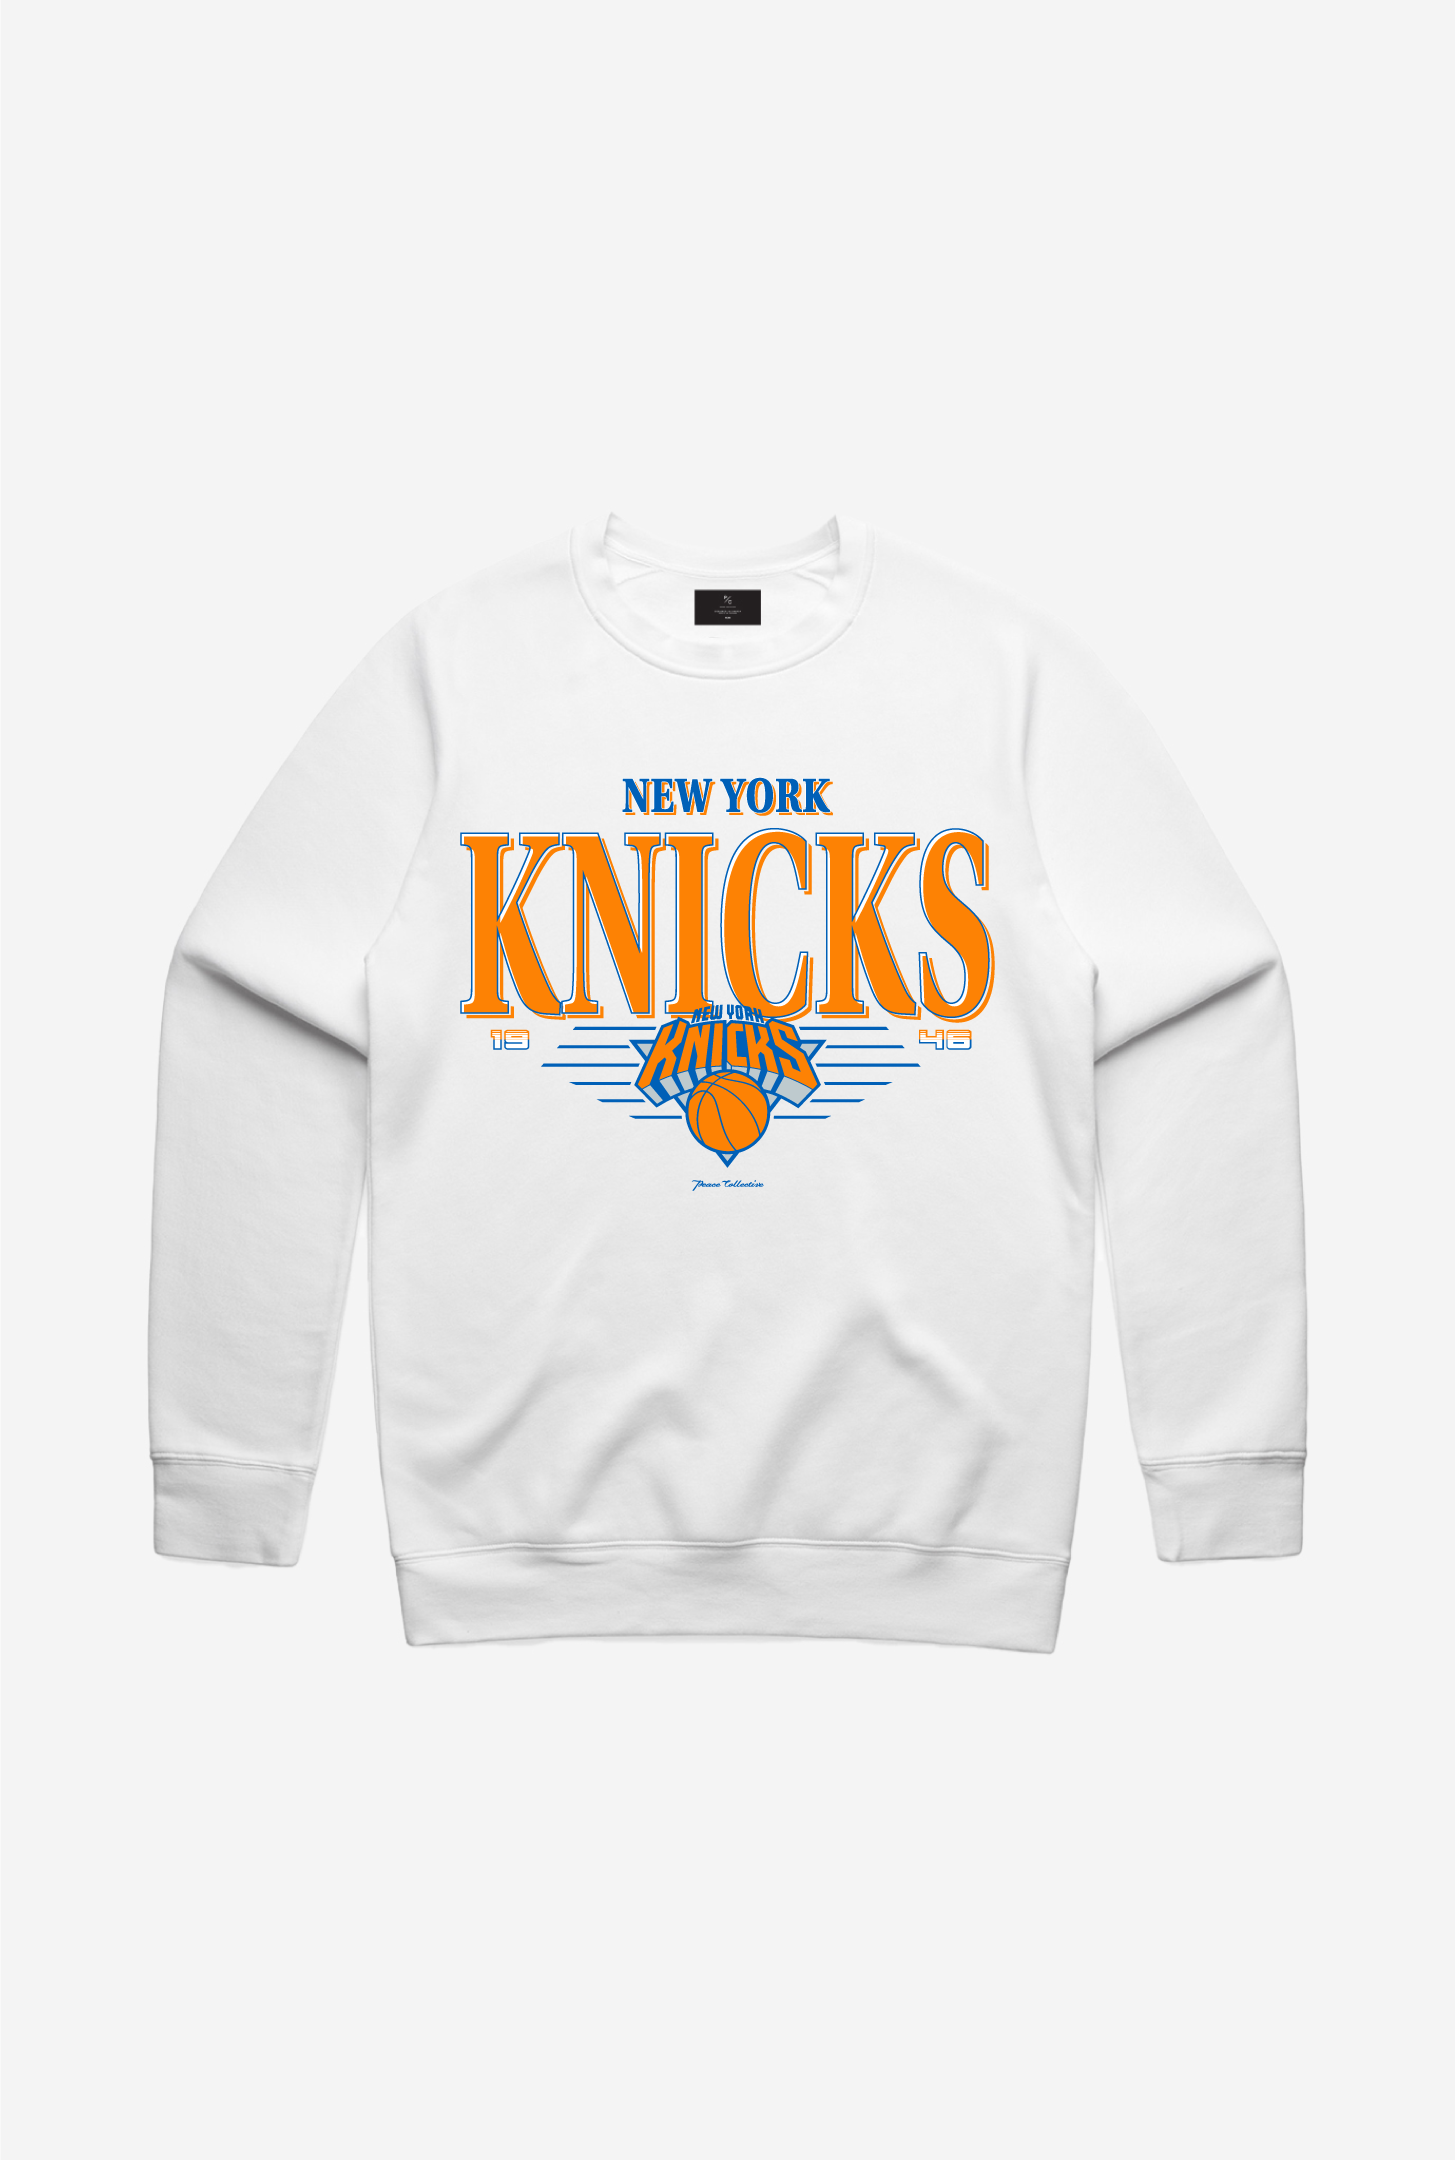 New York Knicks Signature Crewneck - White